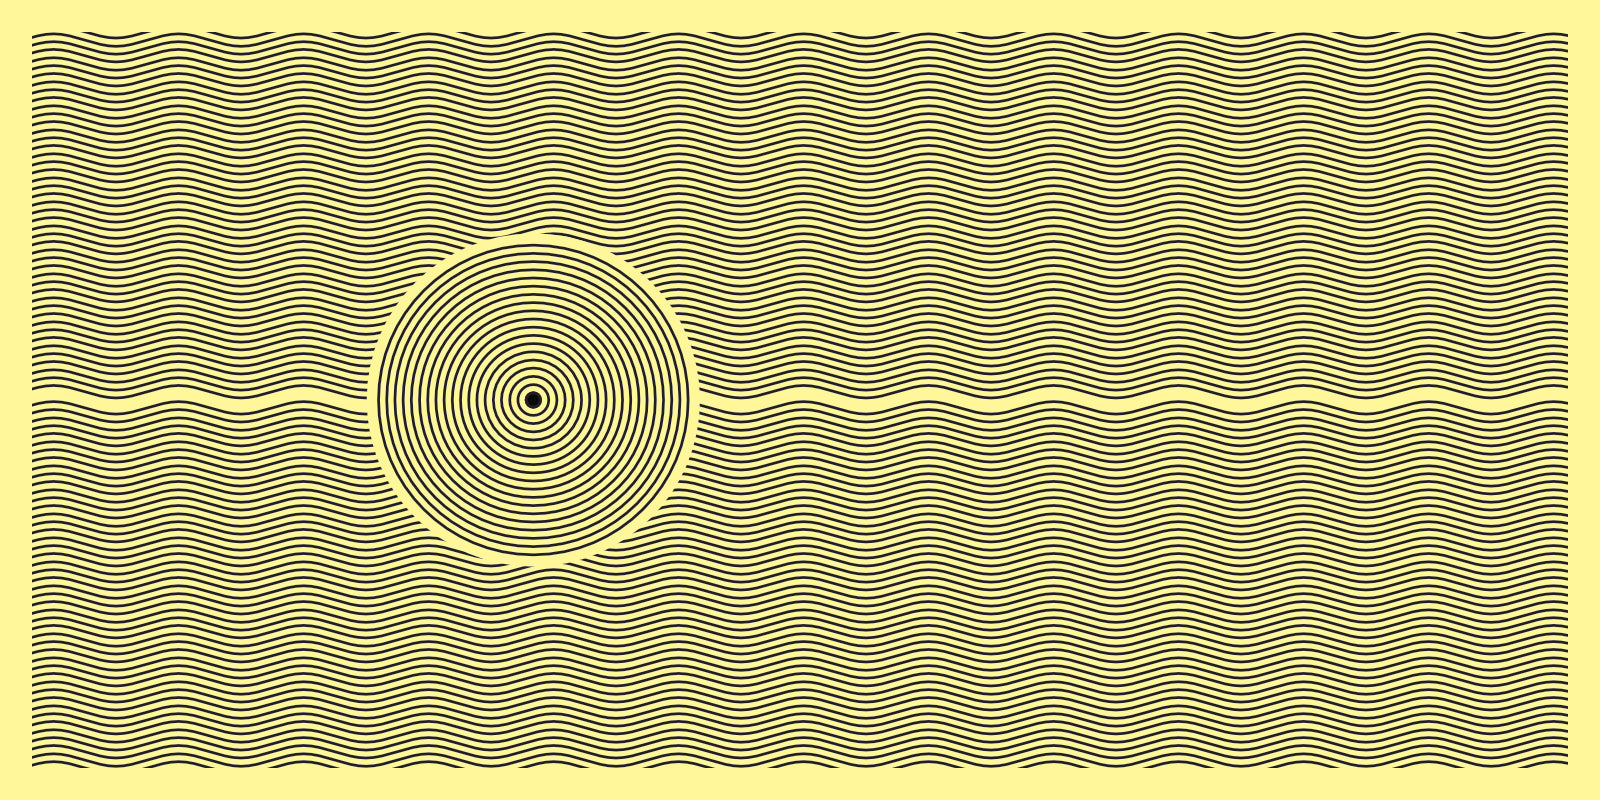 Zen-like wavy pattern on a pale yellow background.